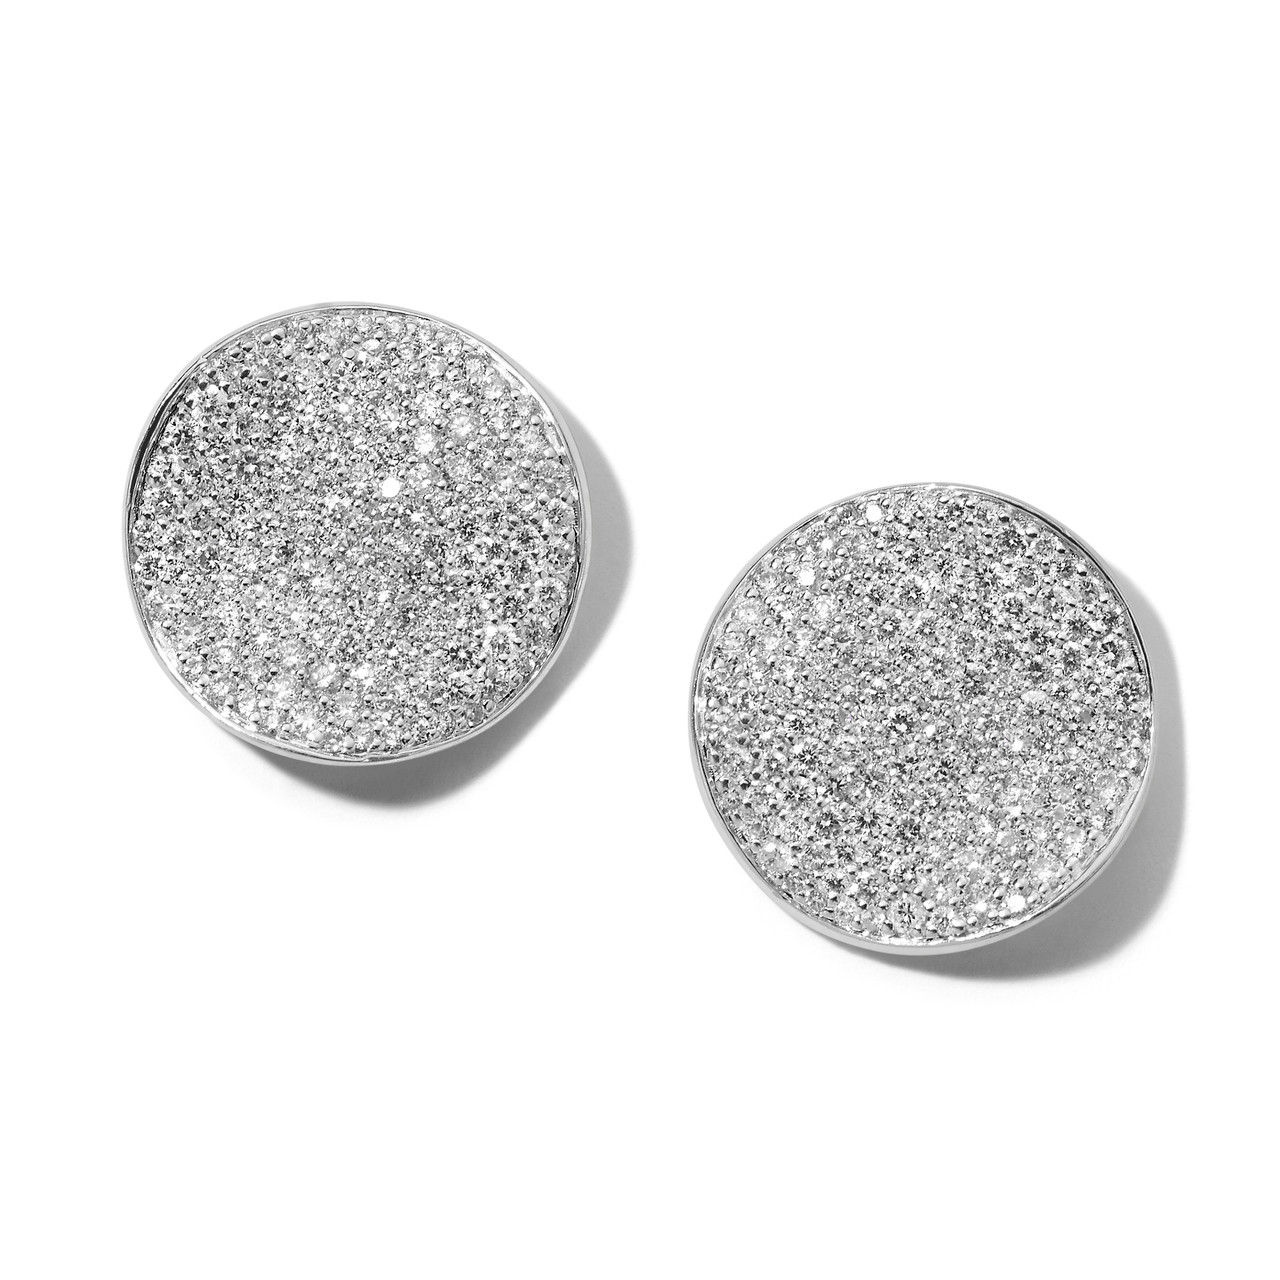 Buy Simple Silver Circle Earrings Hammered Silver Circle Earrings Everyday  Earrings Silver Earrings Sterling Silver Dangle Earrings Online in India -  Etsy